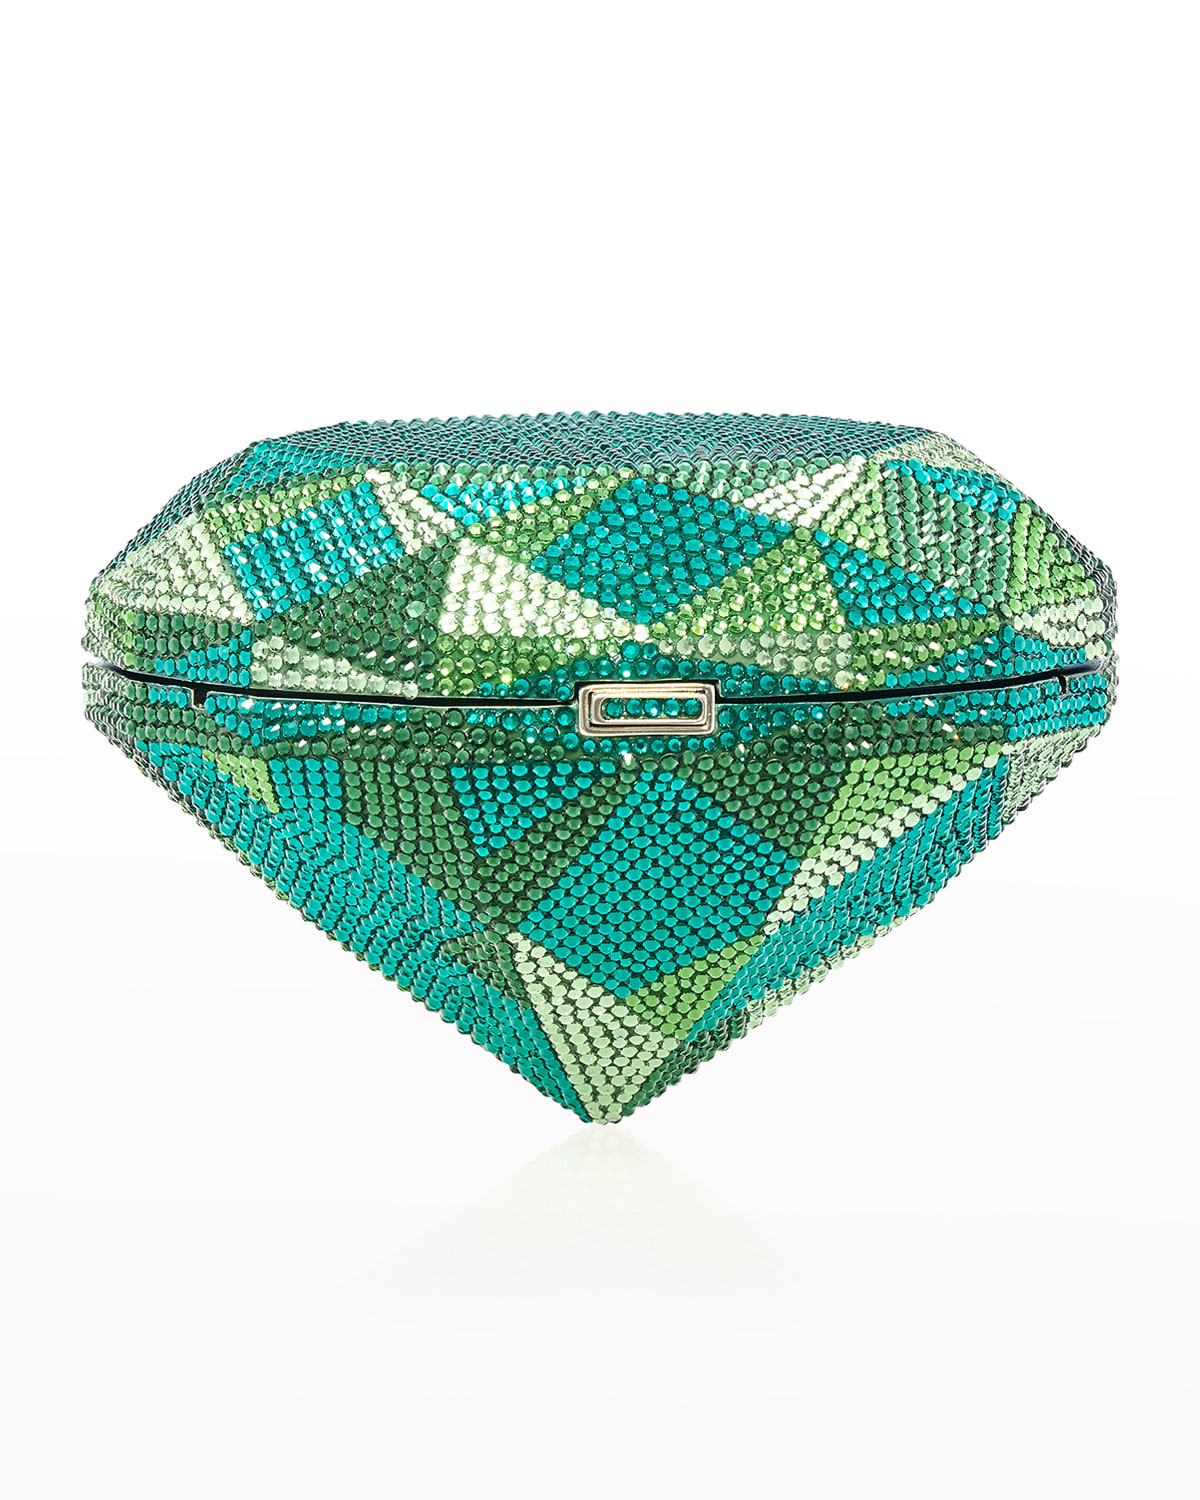 Judith leiber couture emerald diamond crystal minaudiere neiman marcus